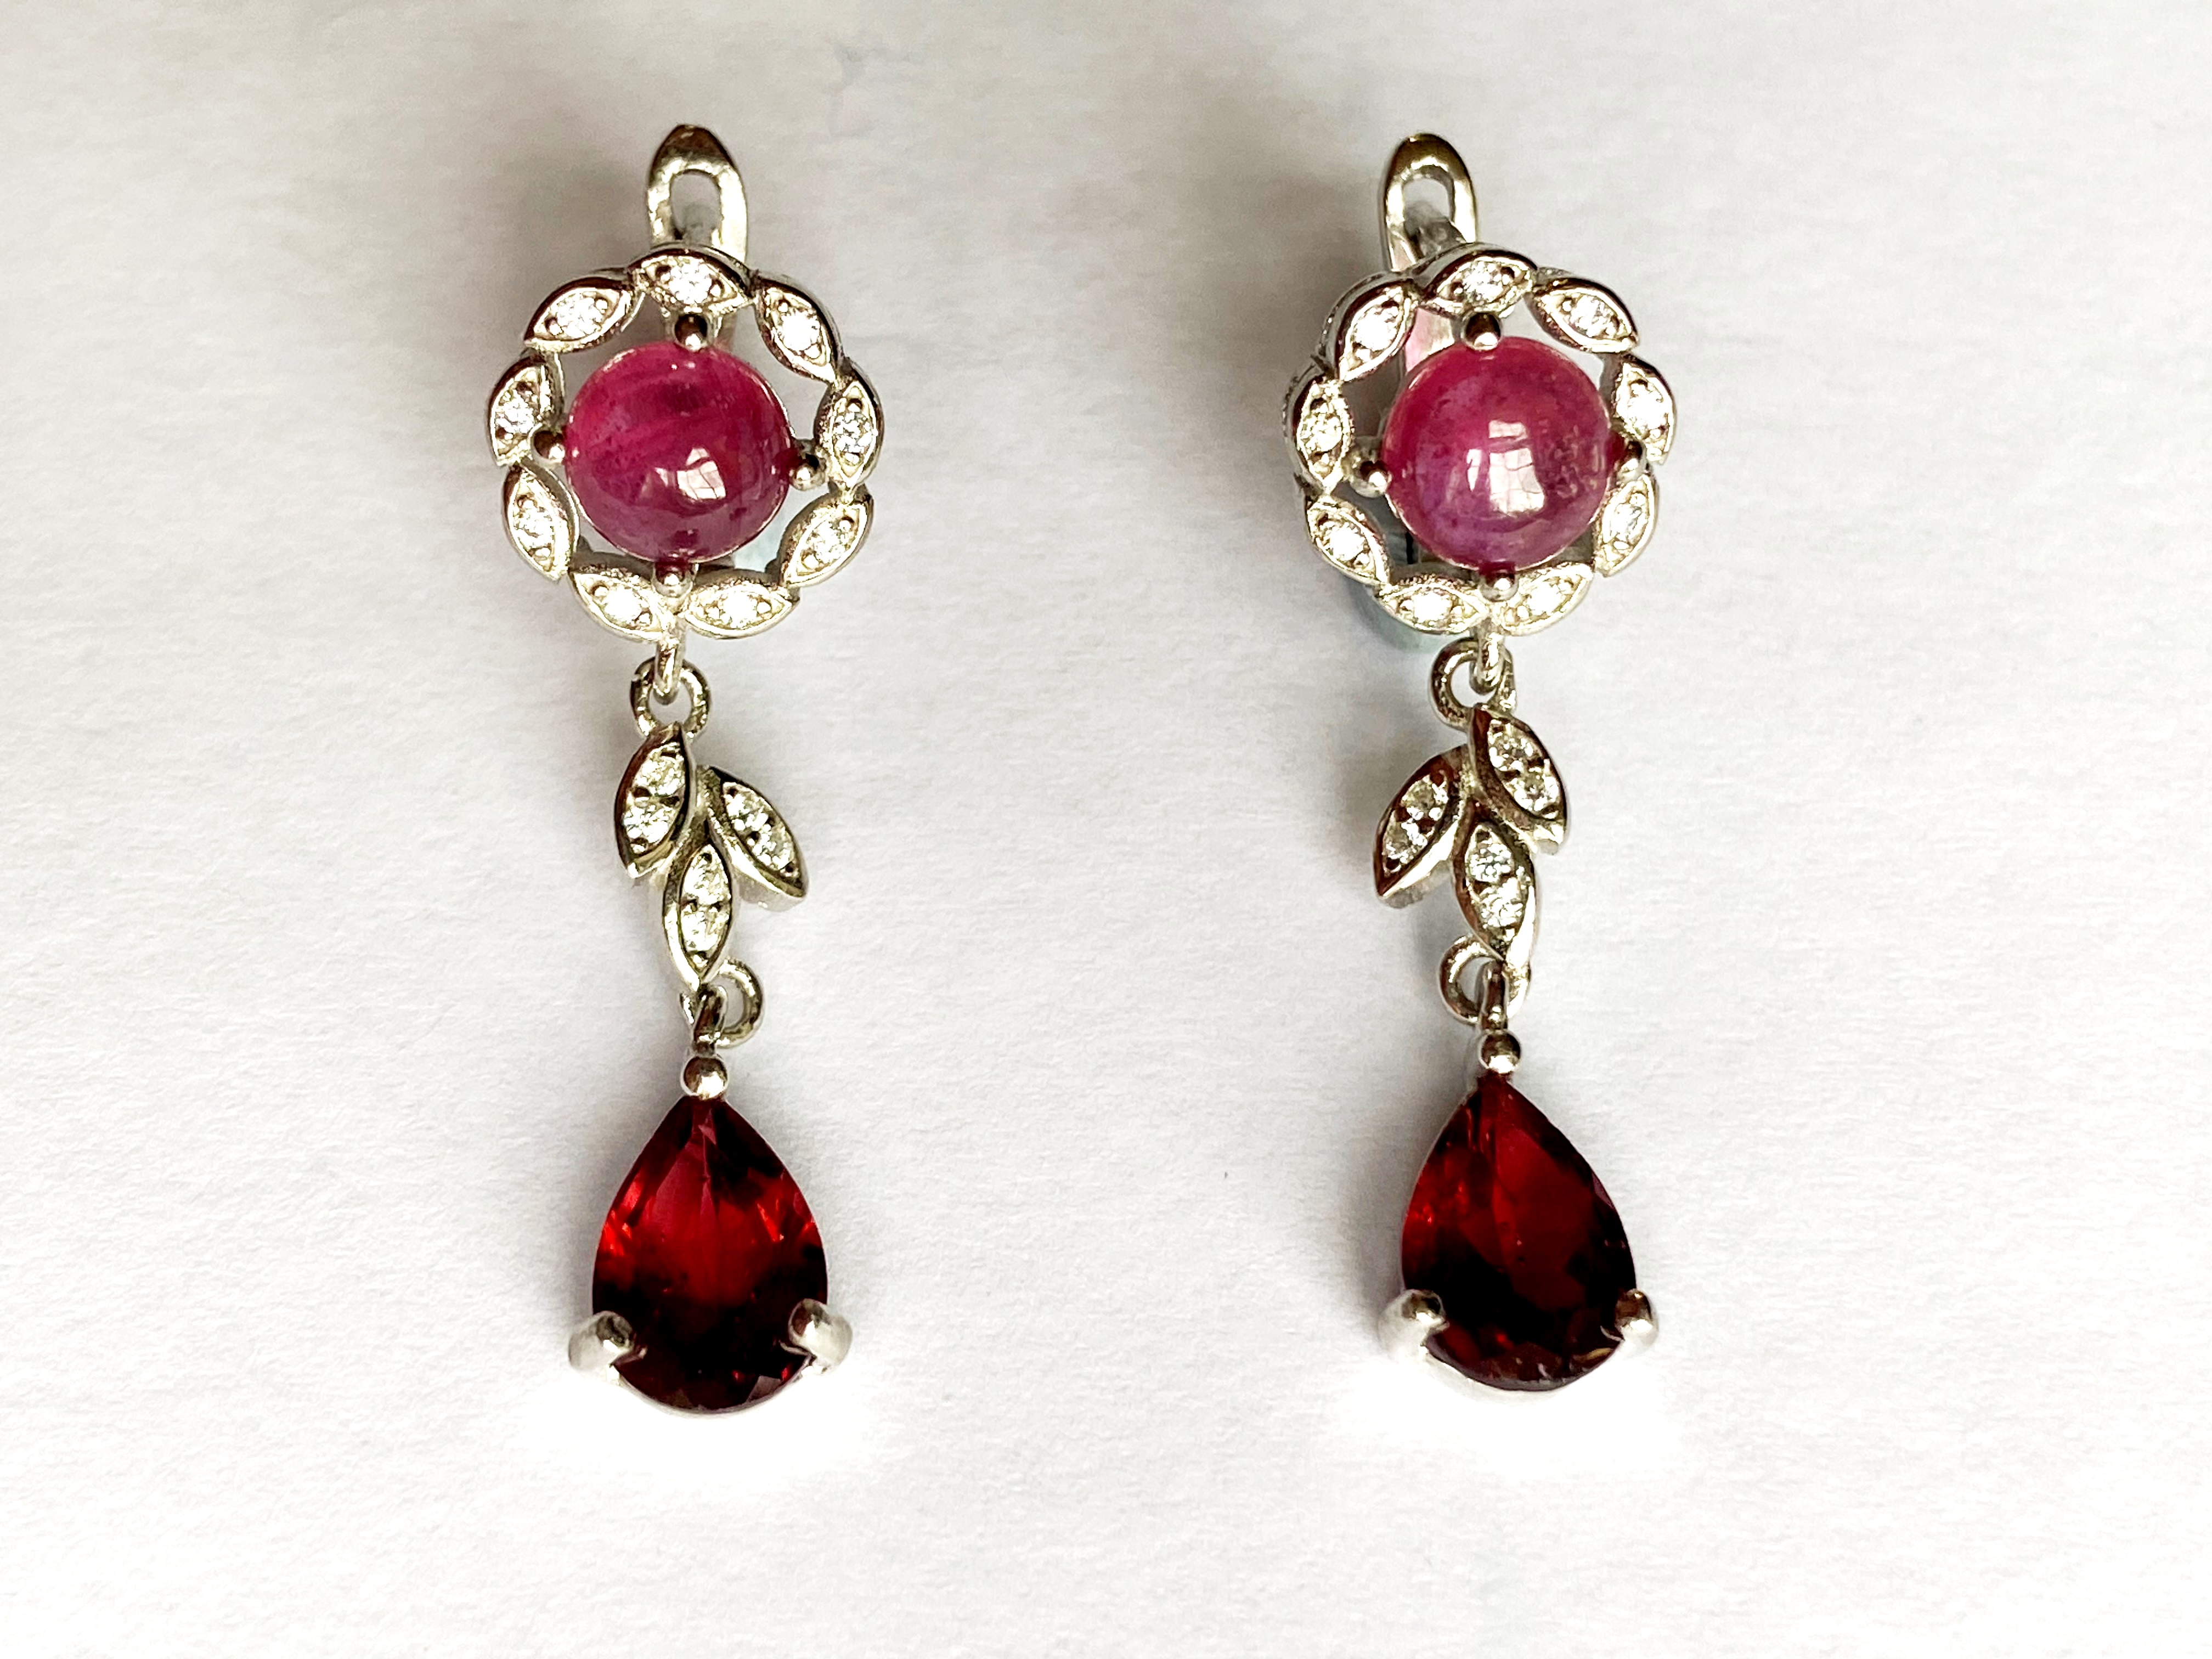 A pair 925 silver drop earrings set with cabochon cut rubies and pear cut garnets, L. 3.2cm.